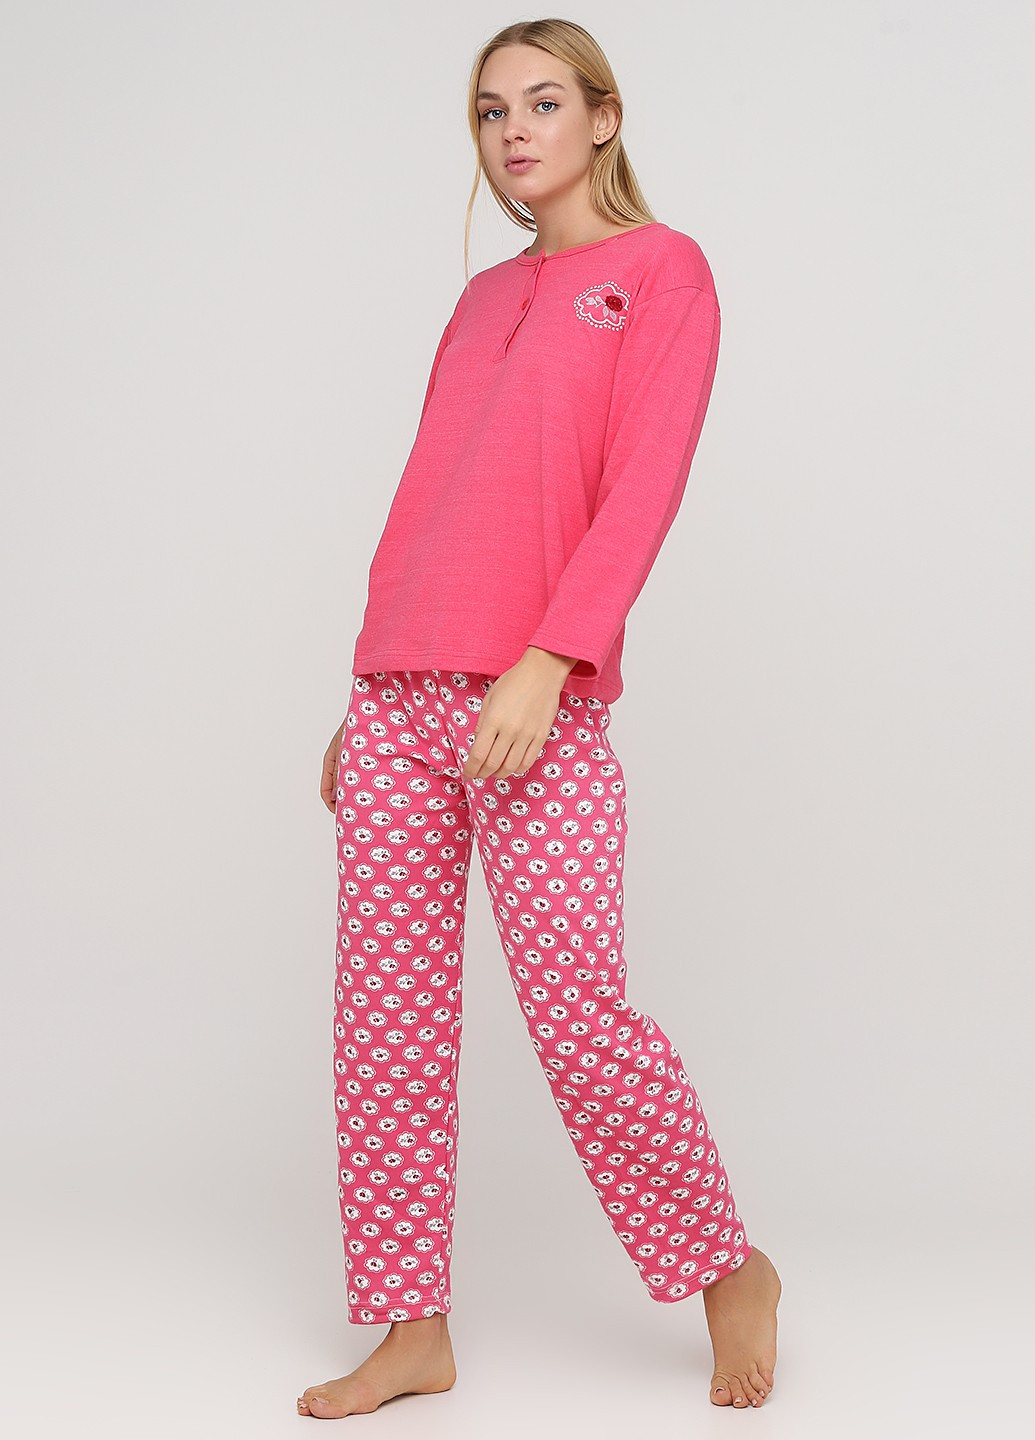 Коралловая зимняя комплект плотный трикотаж (свитшот, брюки) Glisa Pijama